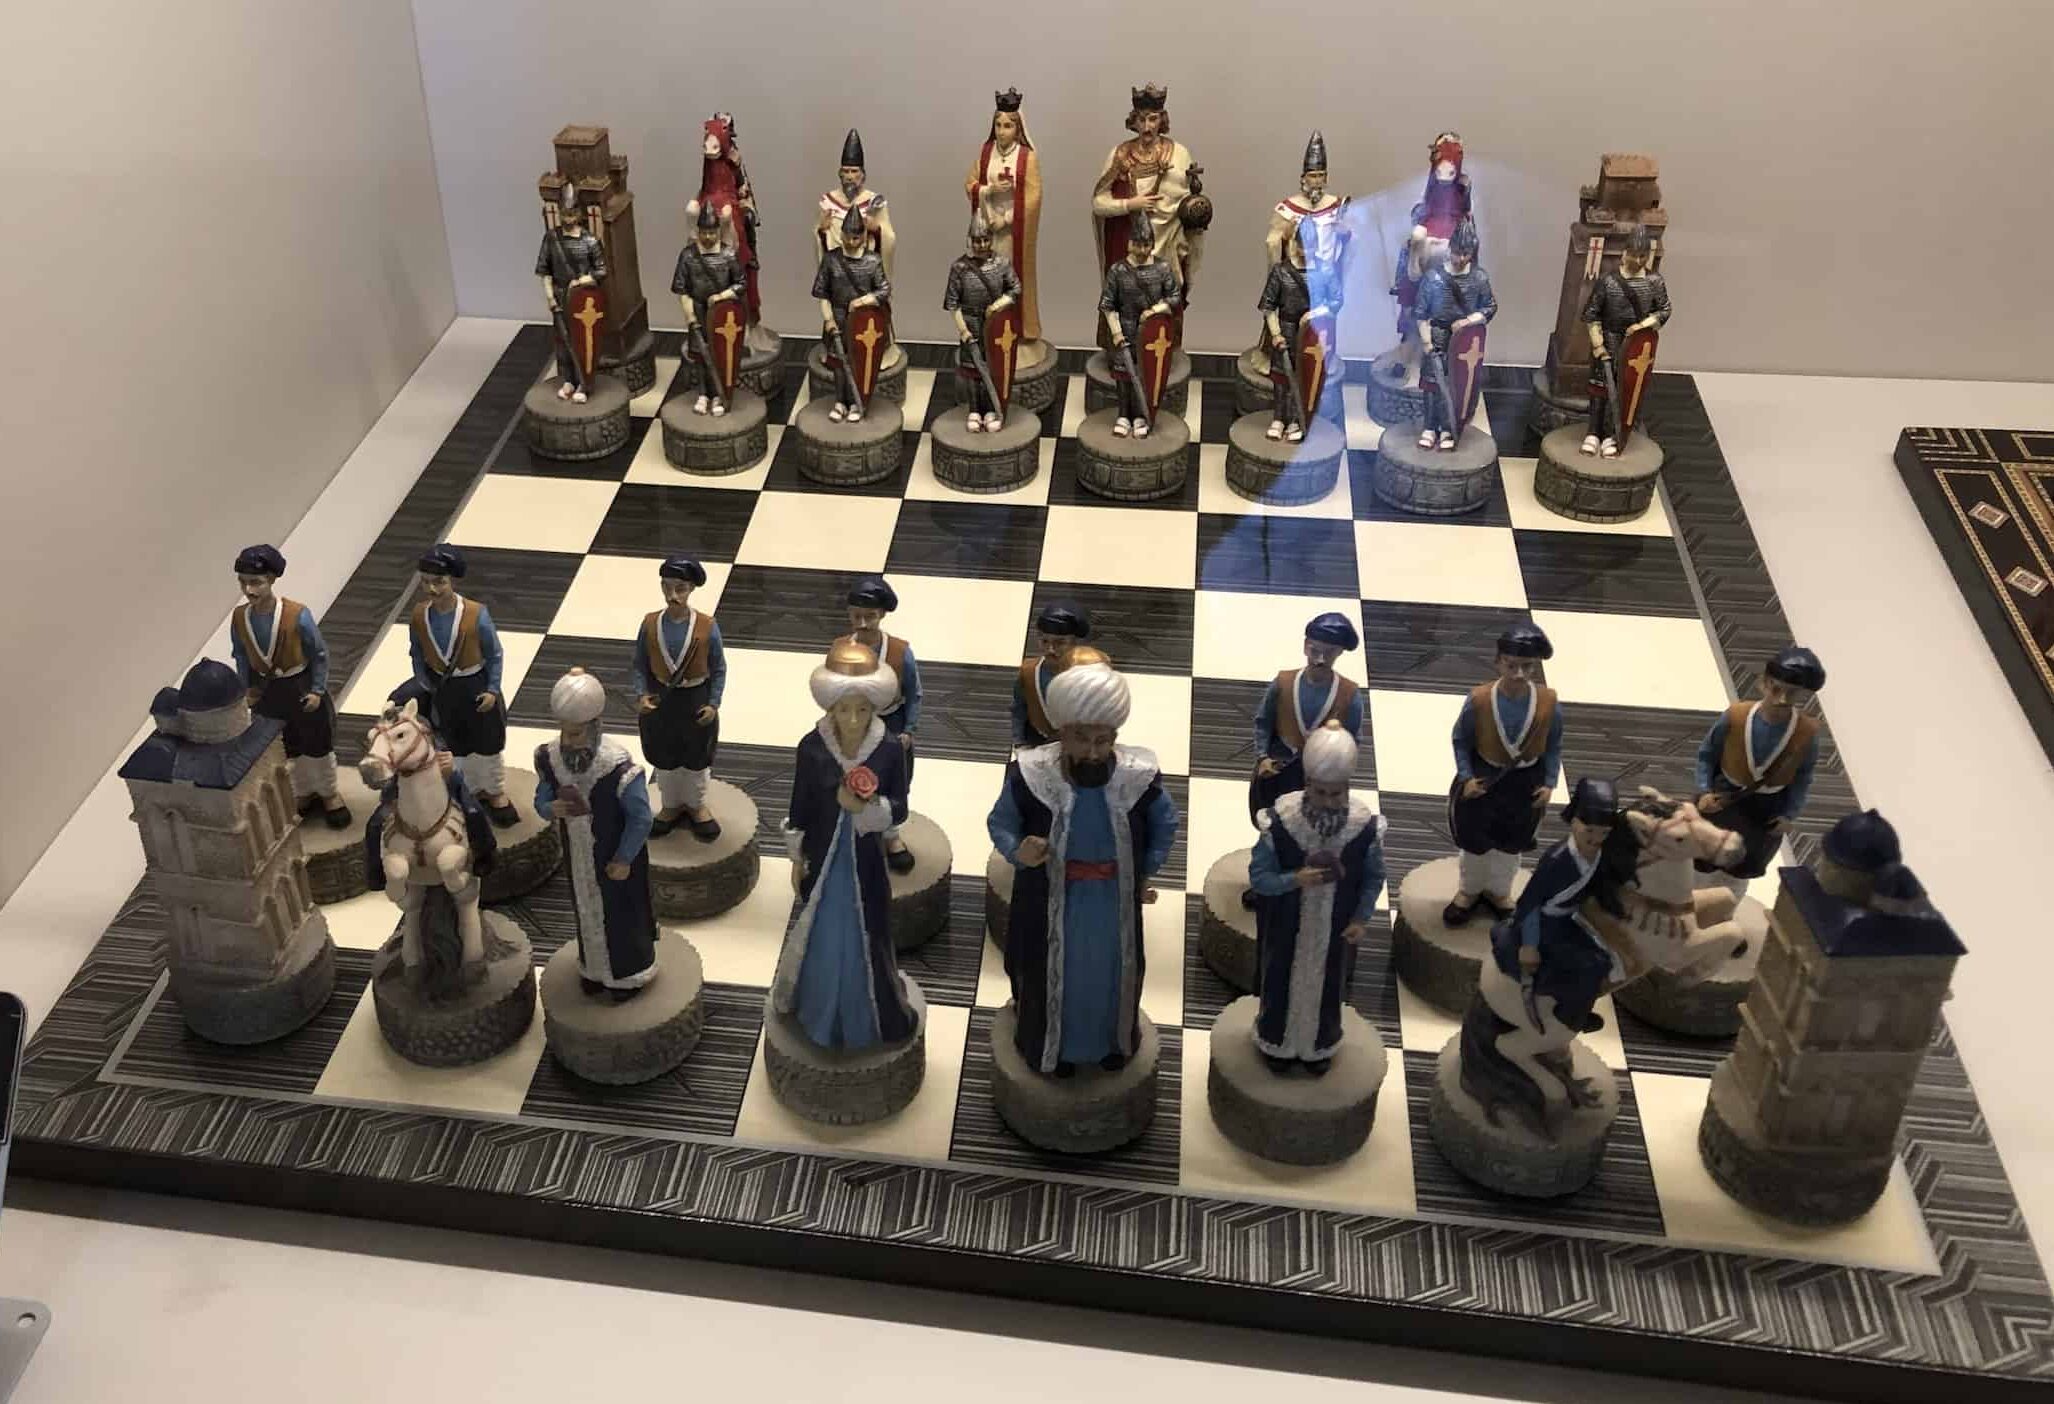 The Crusades chess set (Turkey) at the Gökyay Foundation Chess Museum in Ankara, Turkey